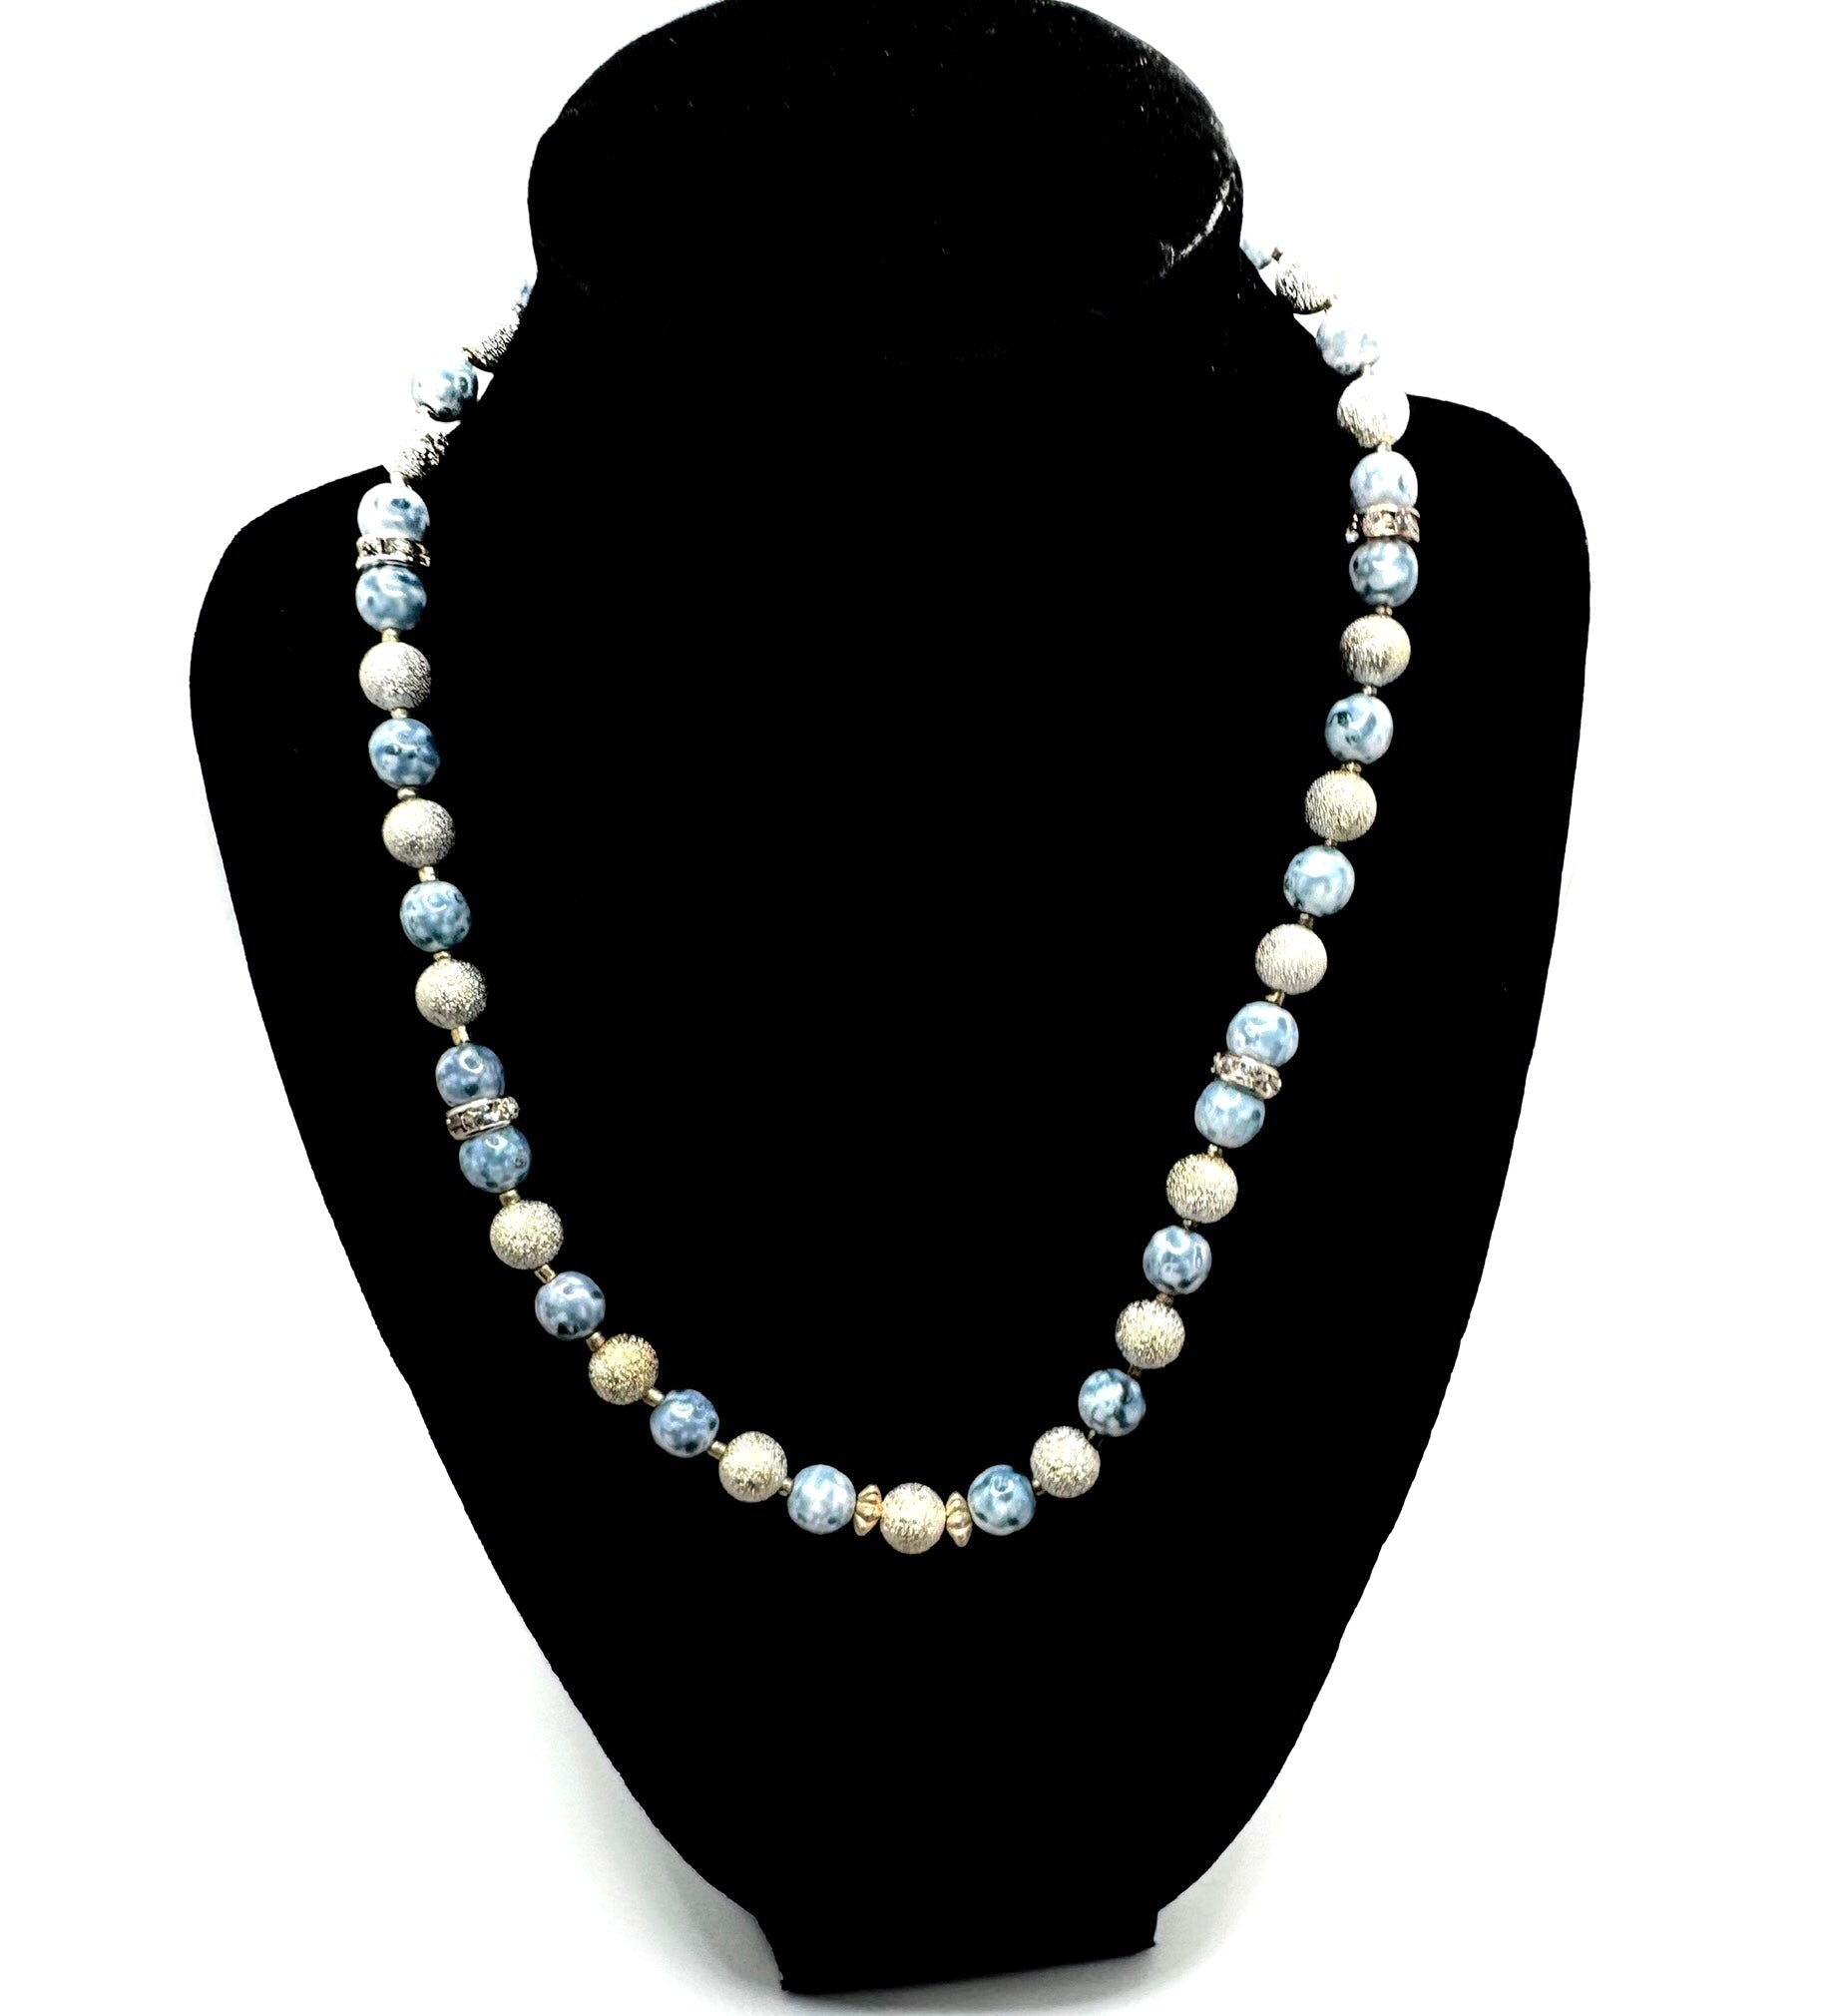 Handmade Ceramic Beads & Silver Tone Necklace - Blue/Silver